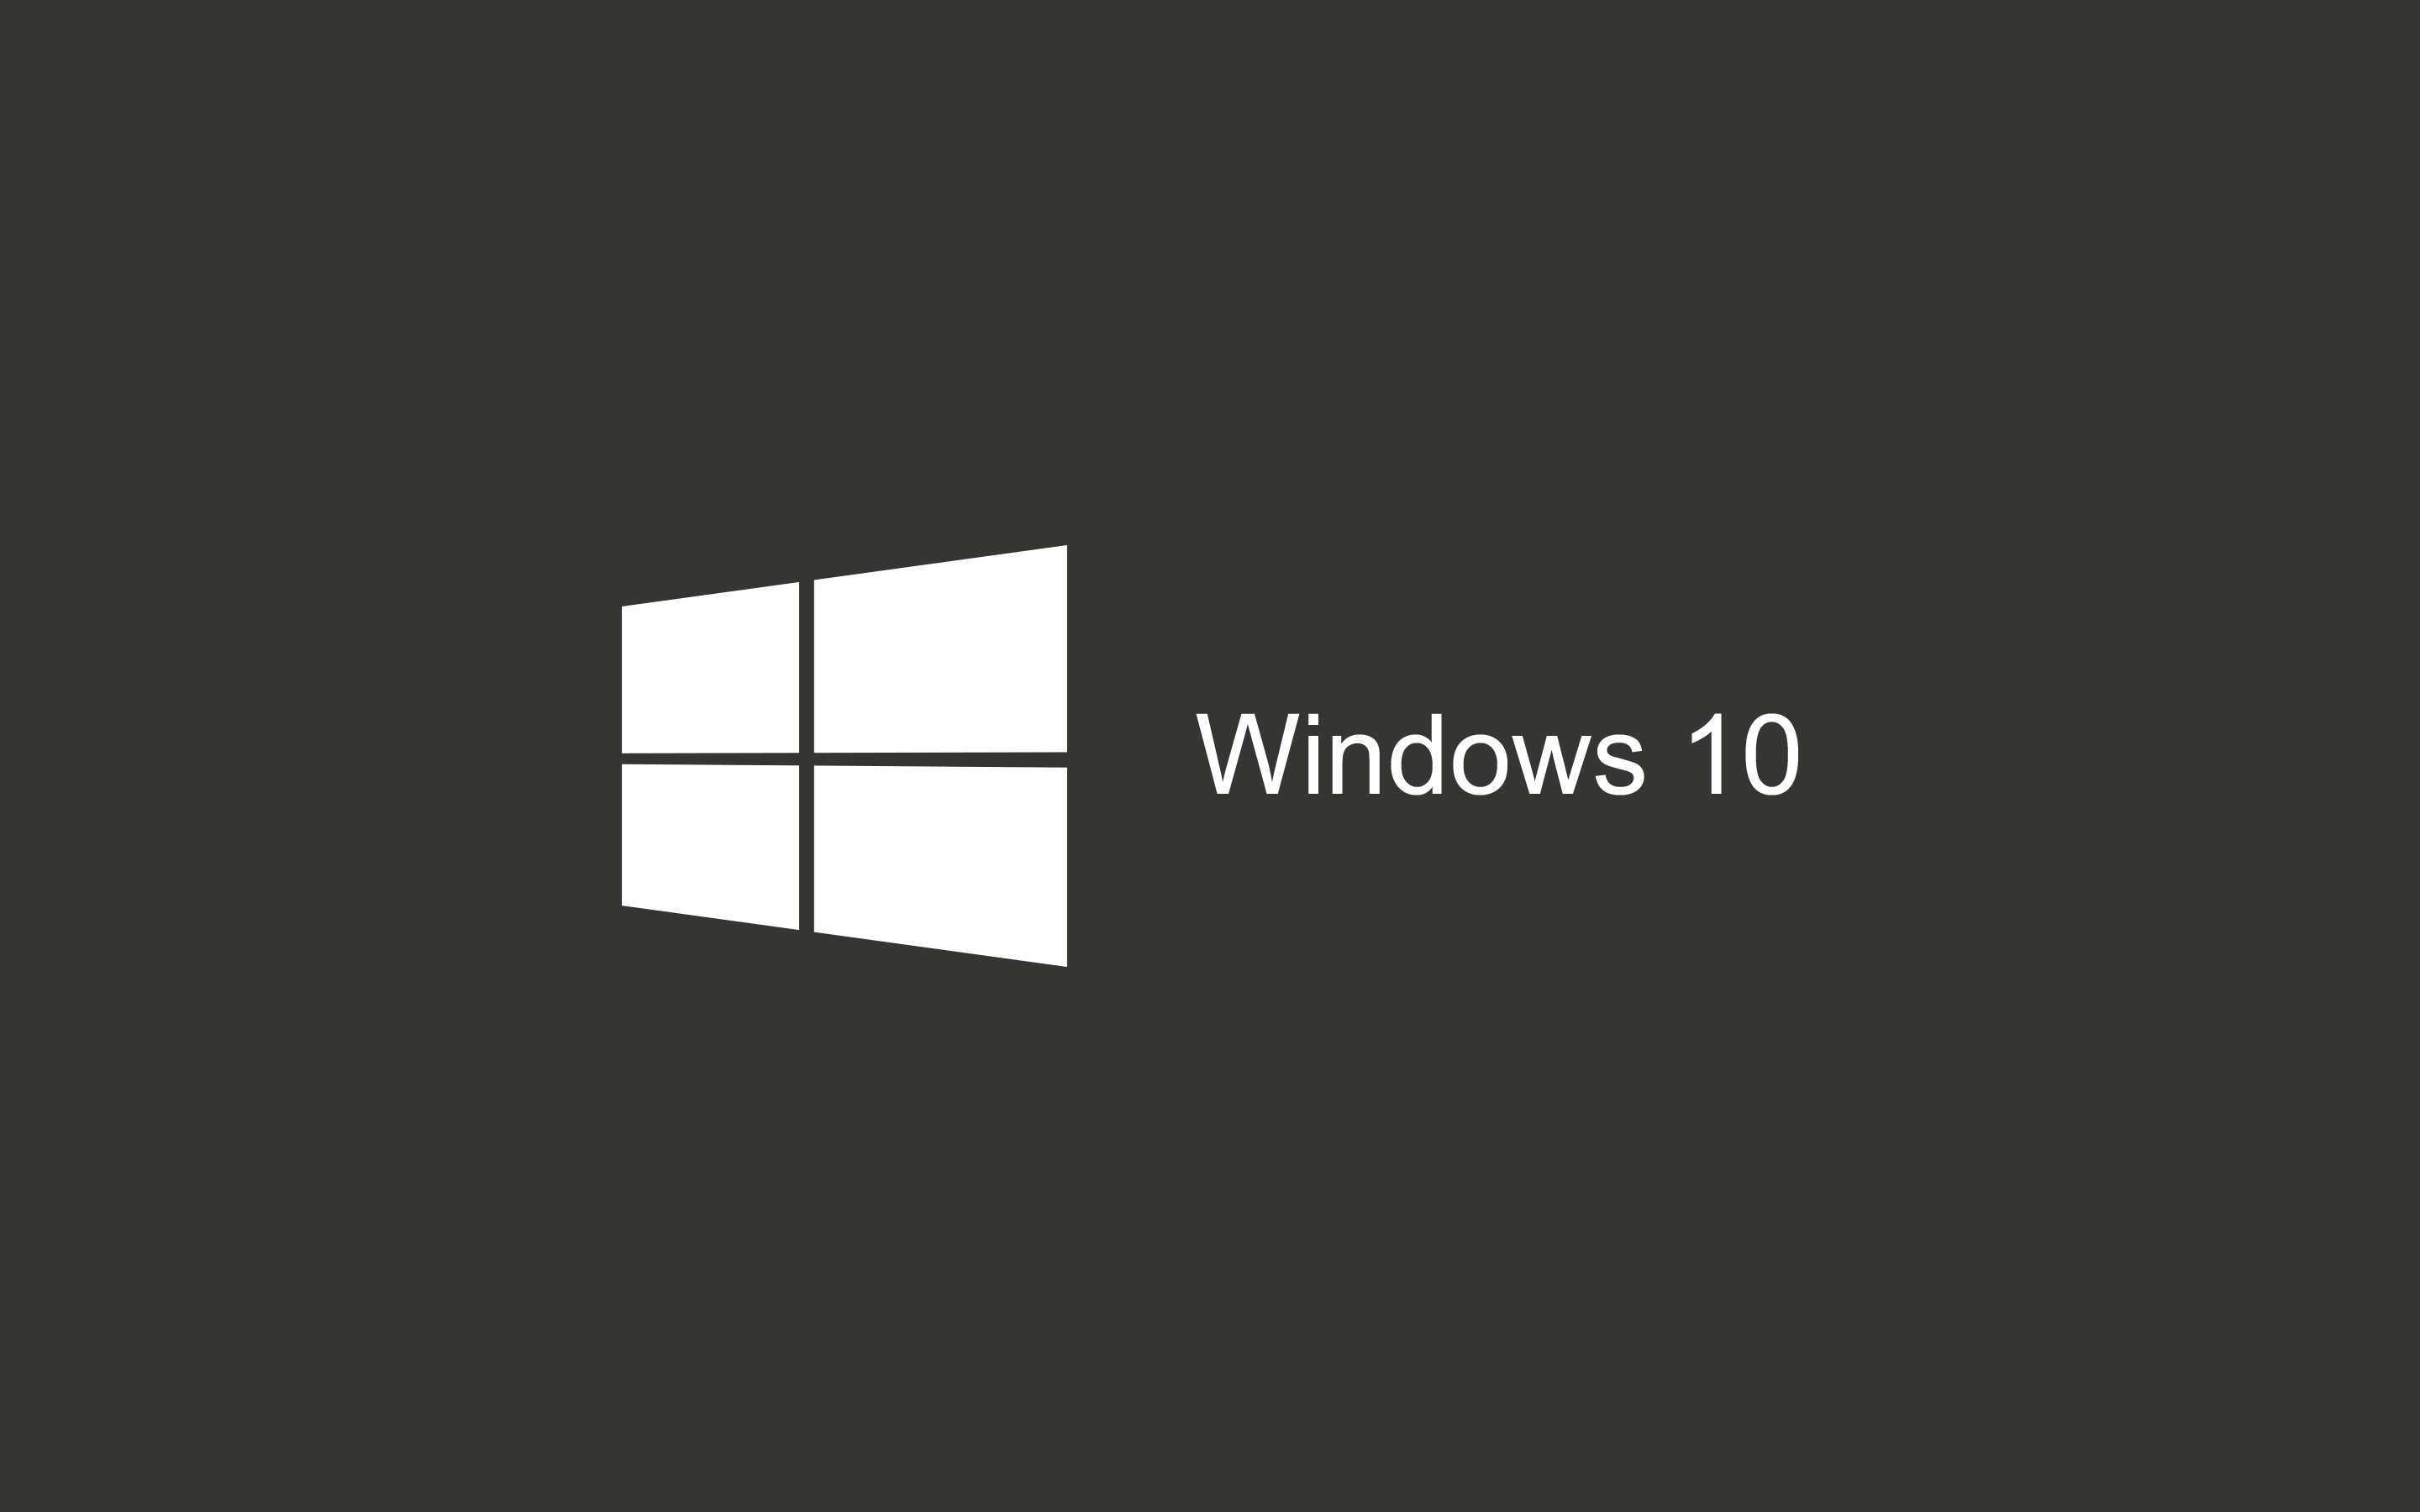 4K Live Wallpaper Windows 10 WallpaperSafari wallpaper, 2880x1800, 1403586